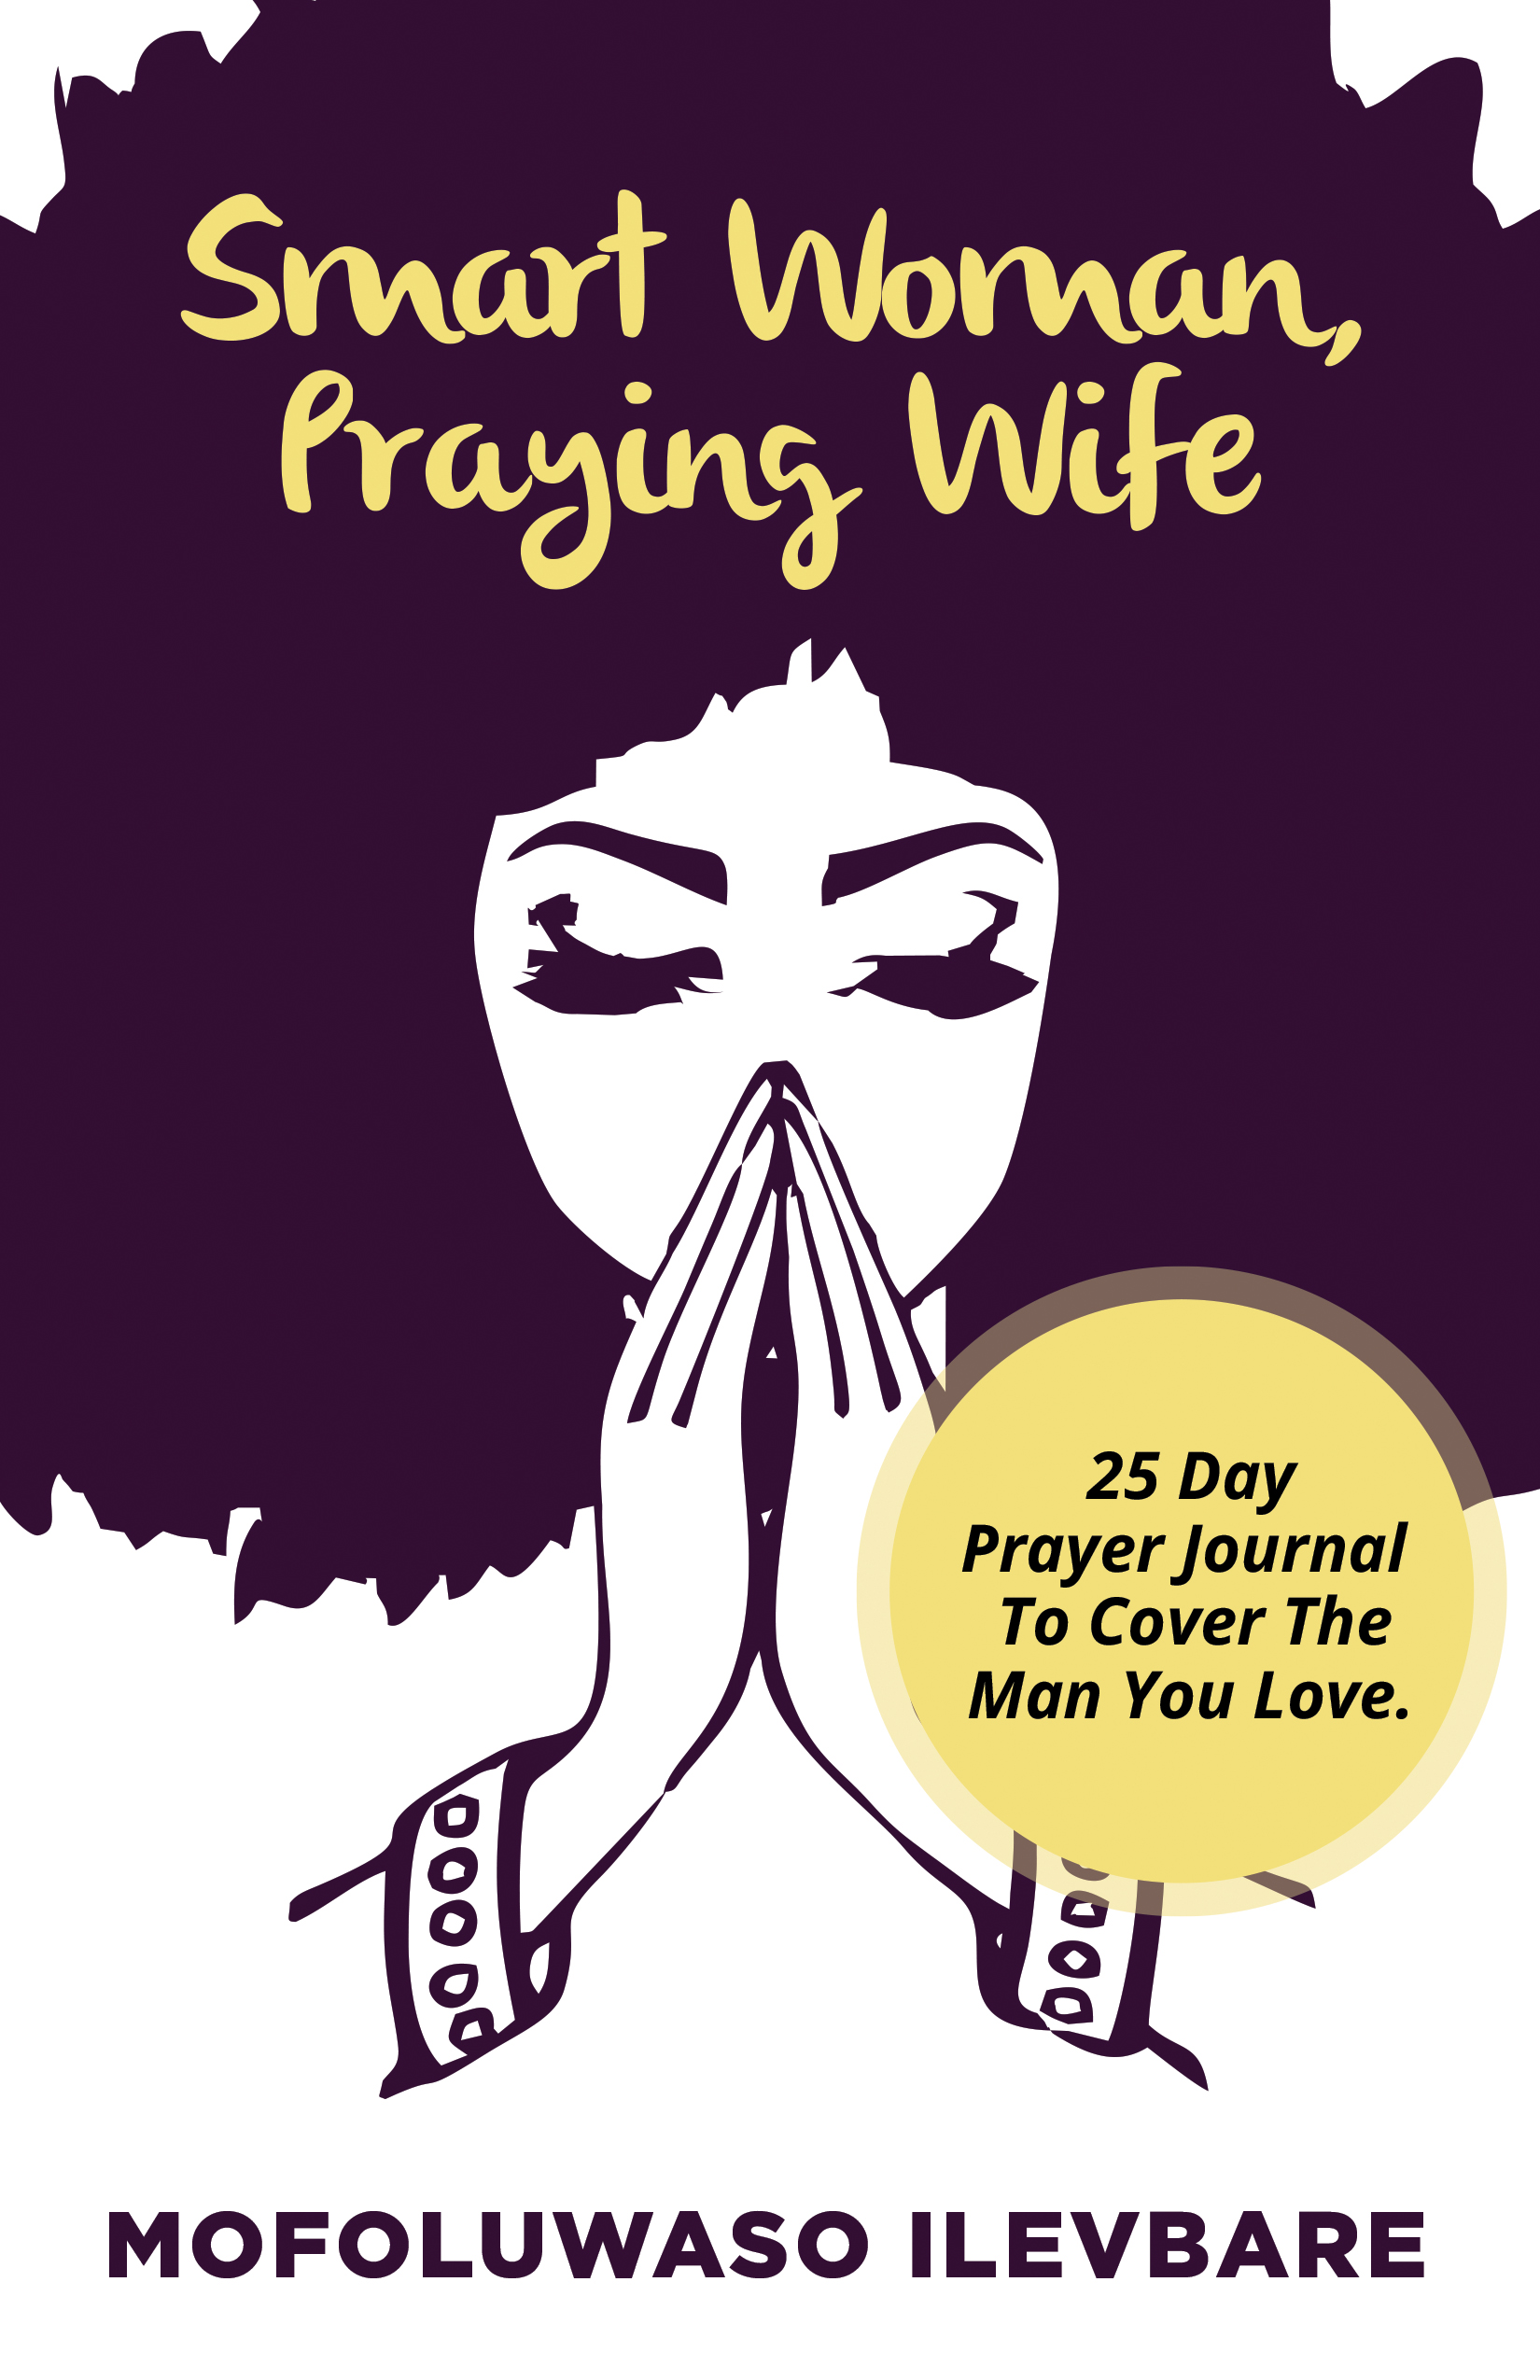 Smart Woman, Praying Wife